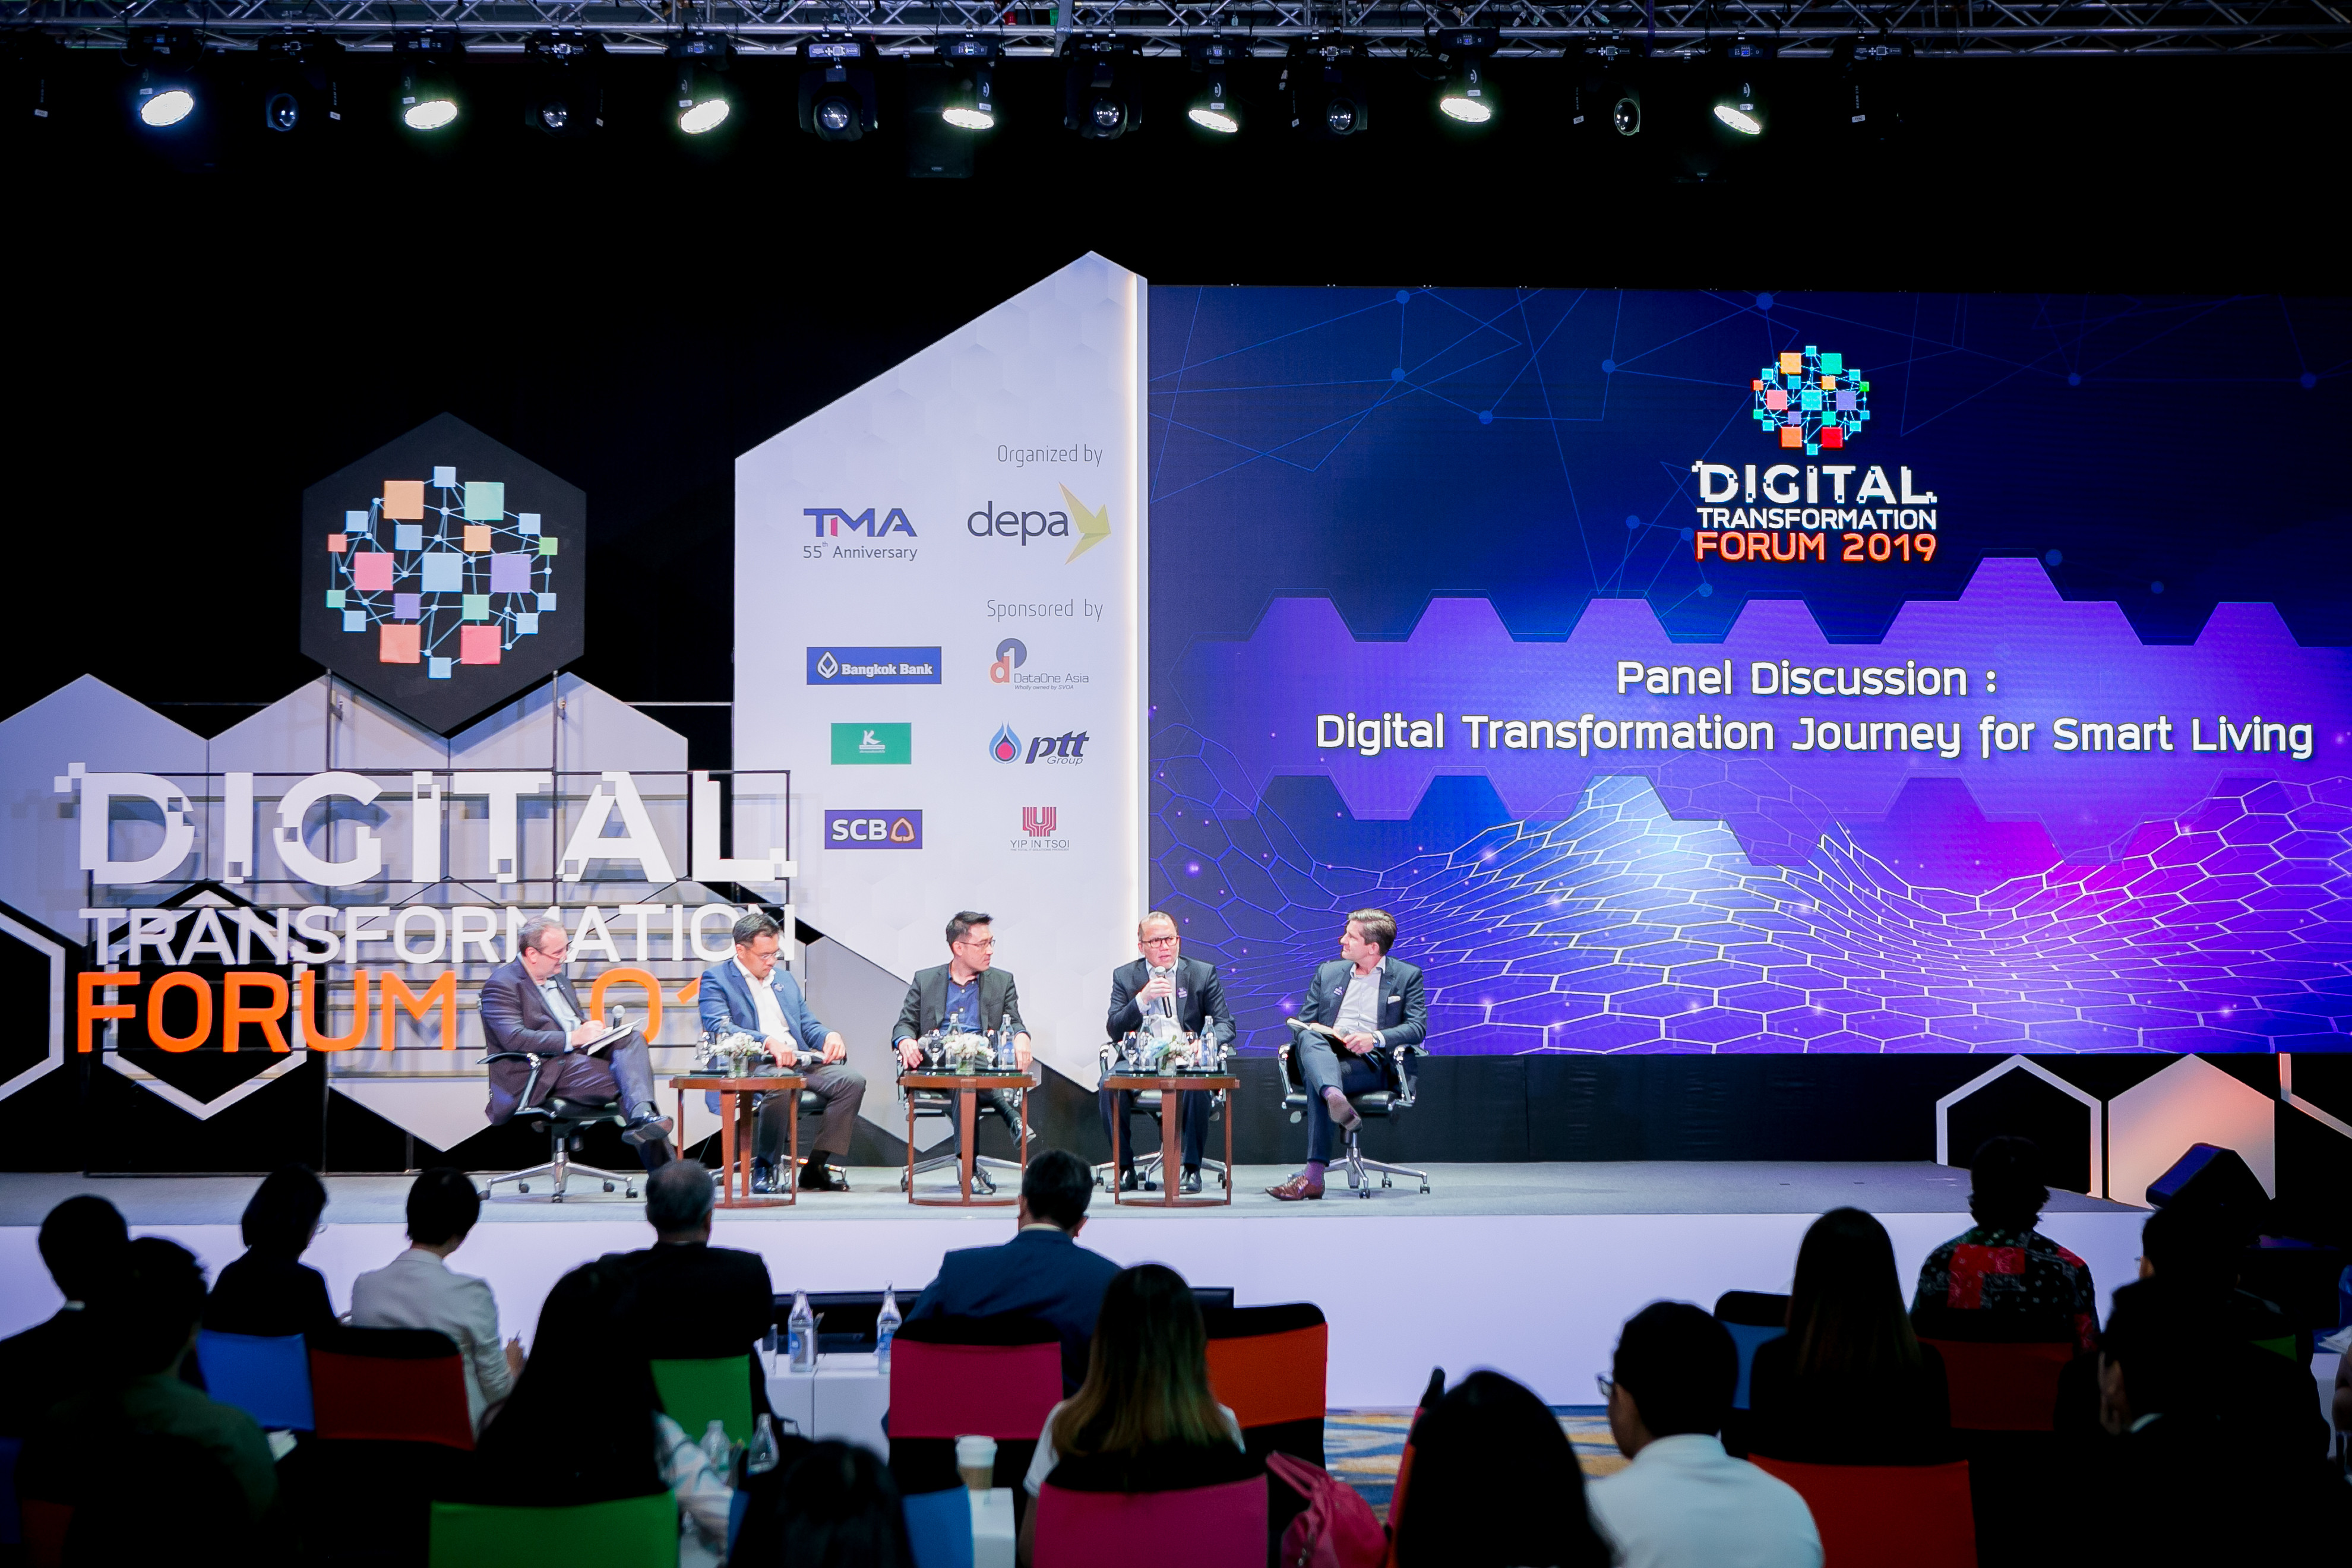 Digital Transformation Forum 2019